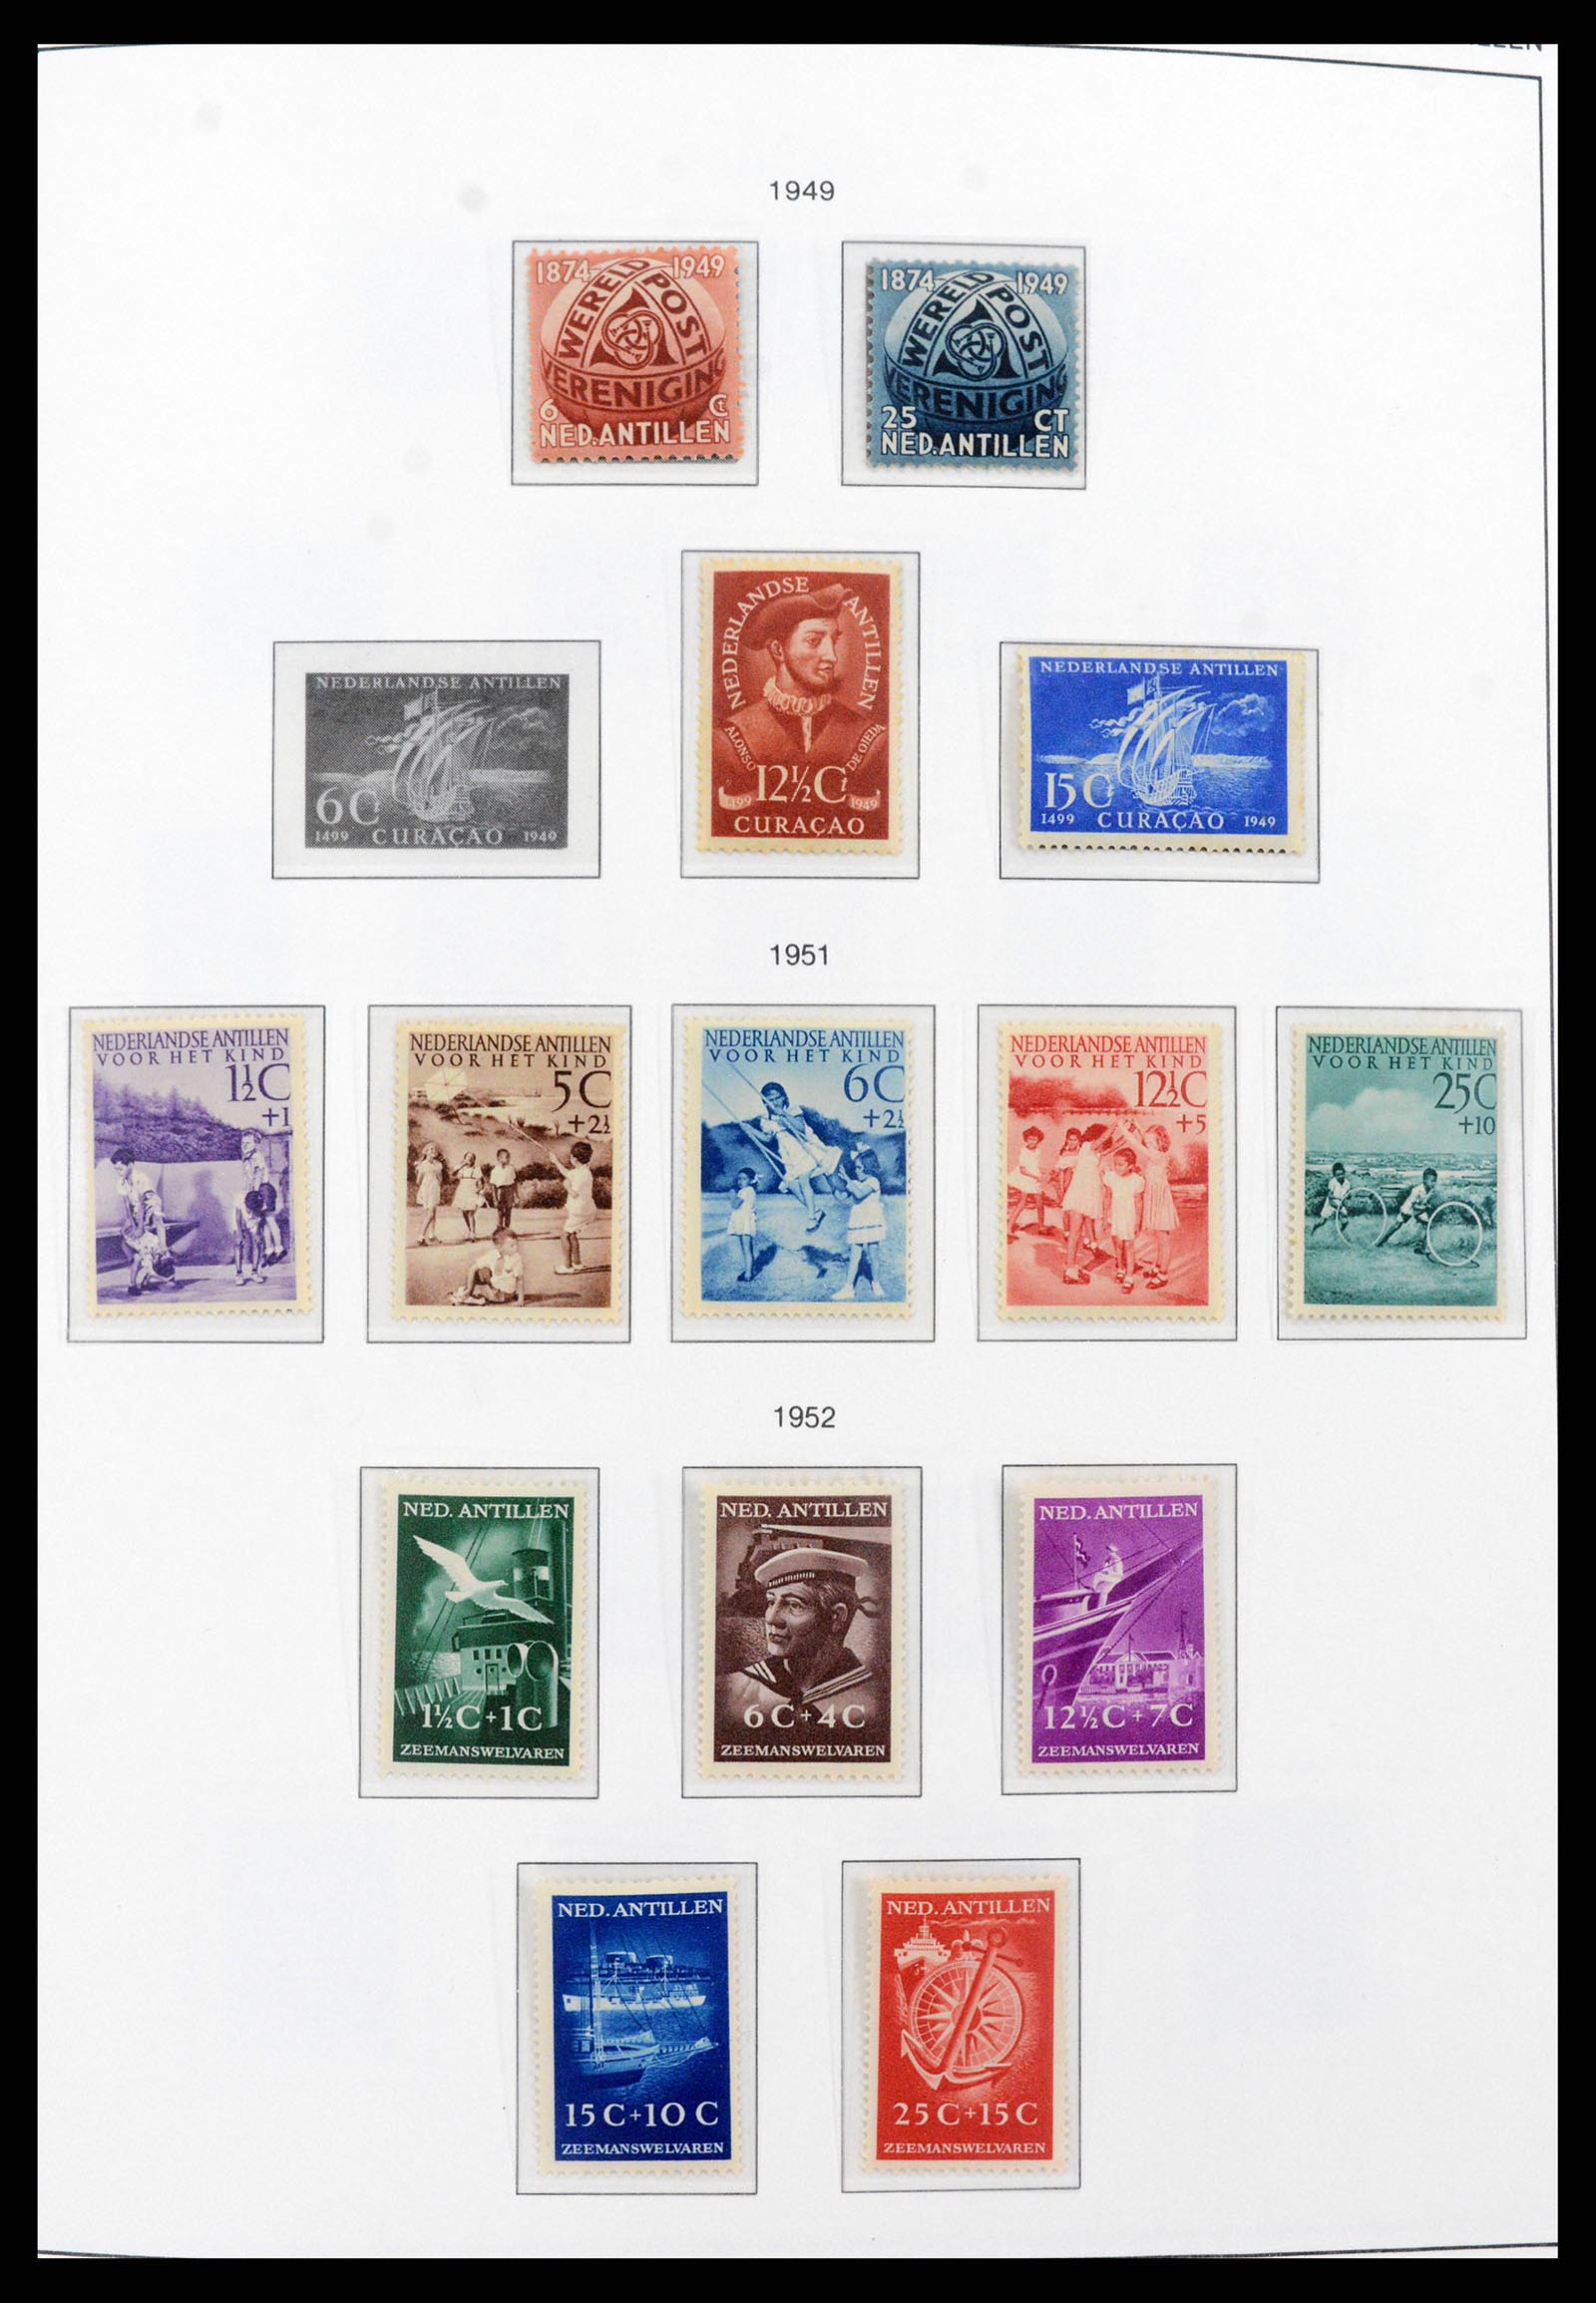 37693 001 - Stamp collection 37693 Netherlands Antilles 1949-2001.